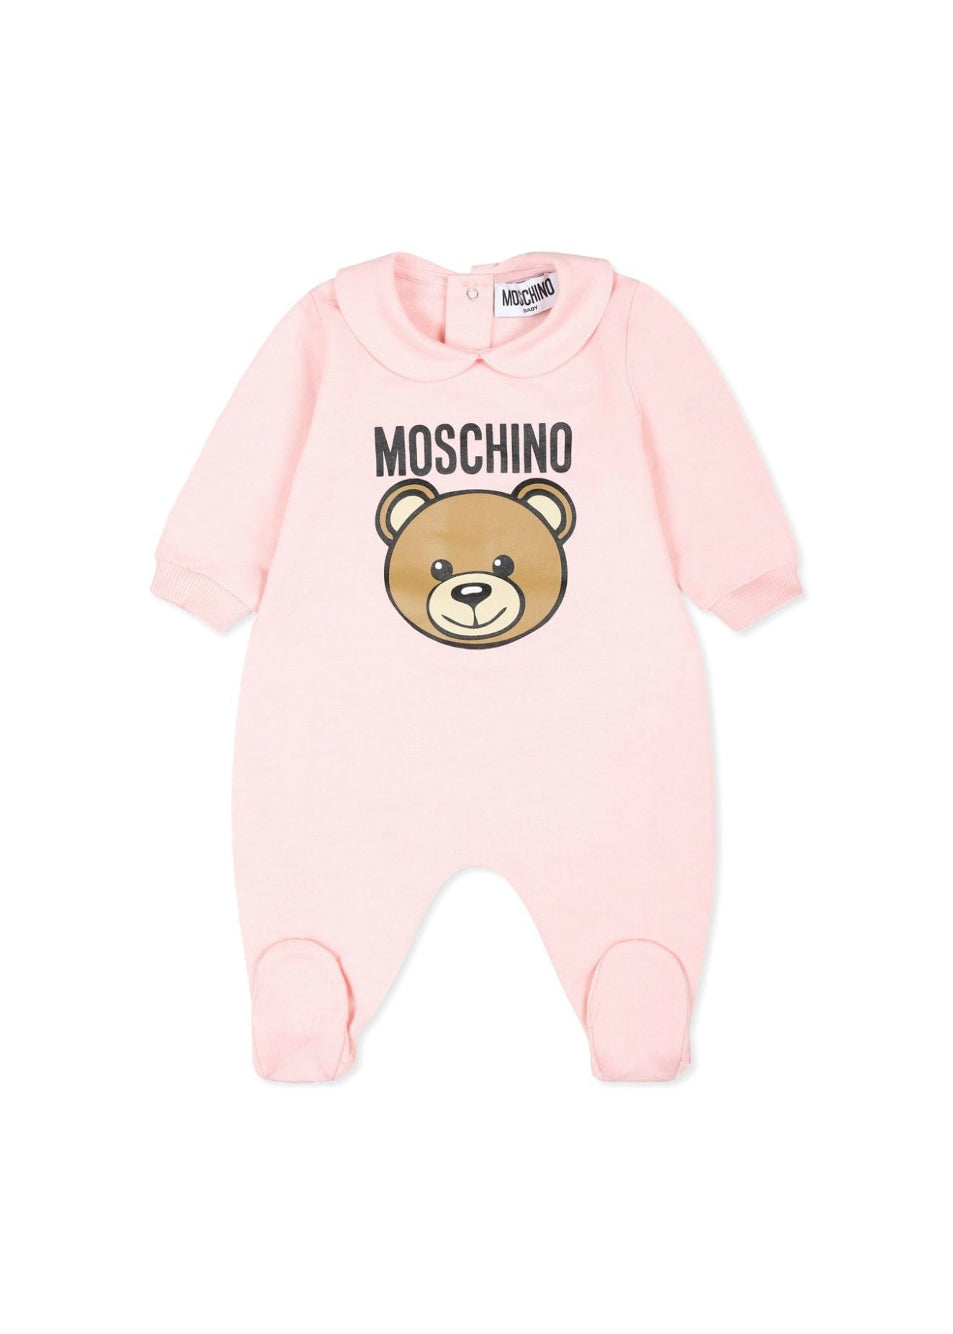 Moschino Kids Tutina Rosa con Logo Teddy Bear per Neonate